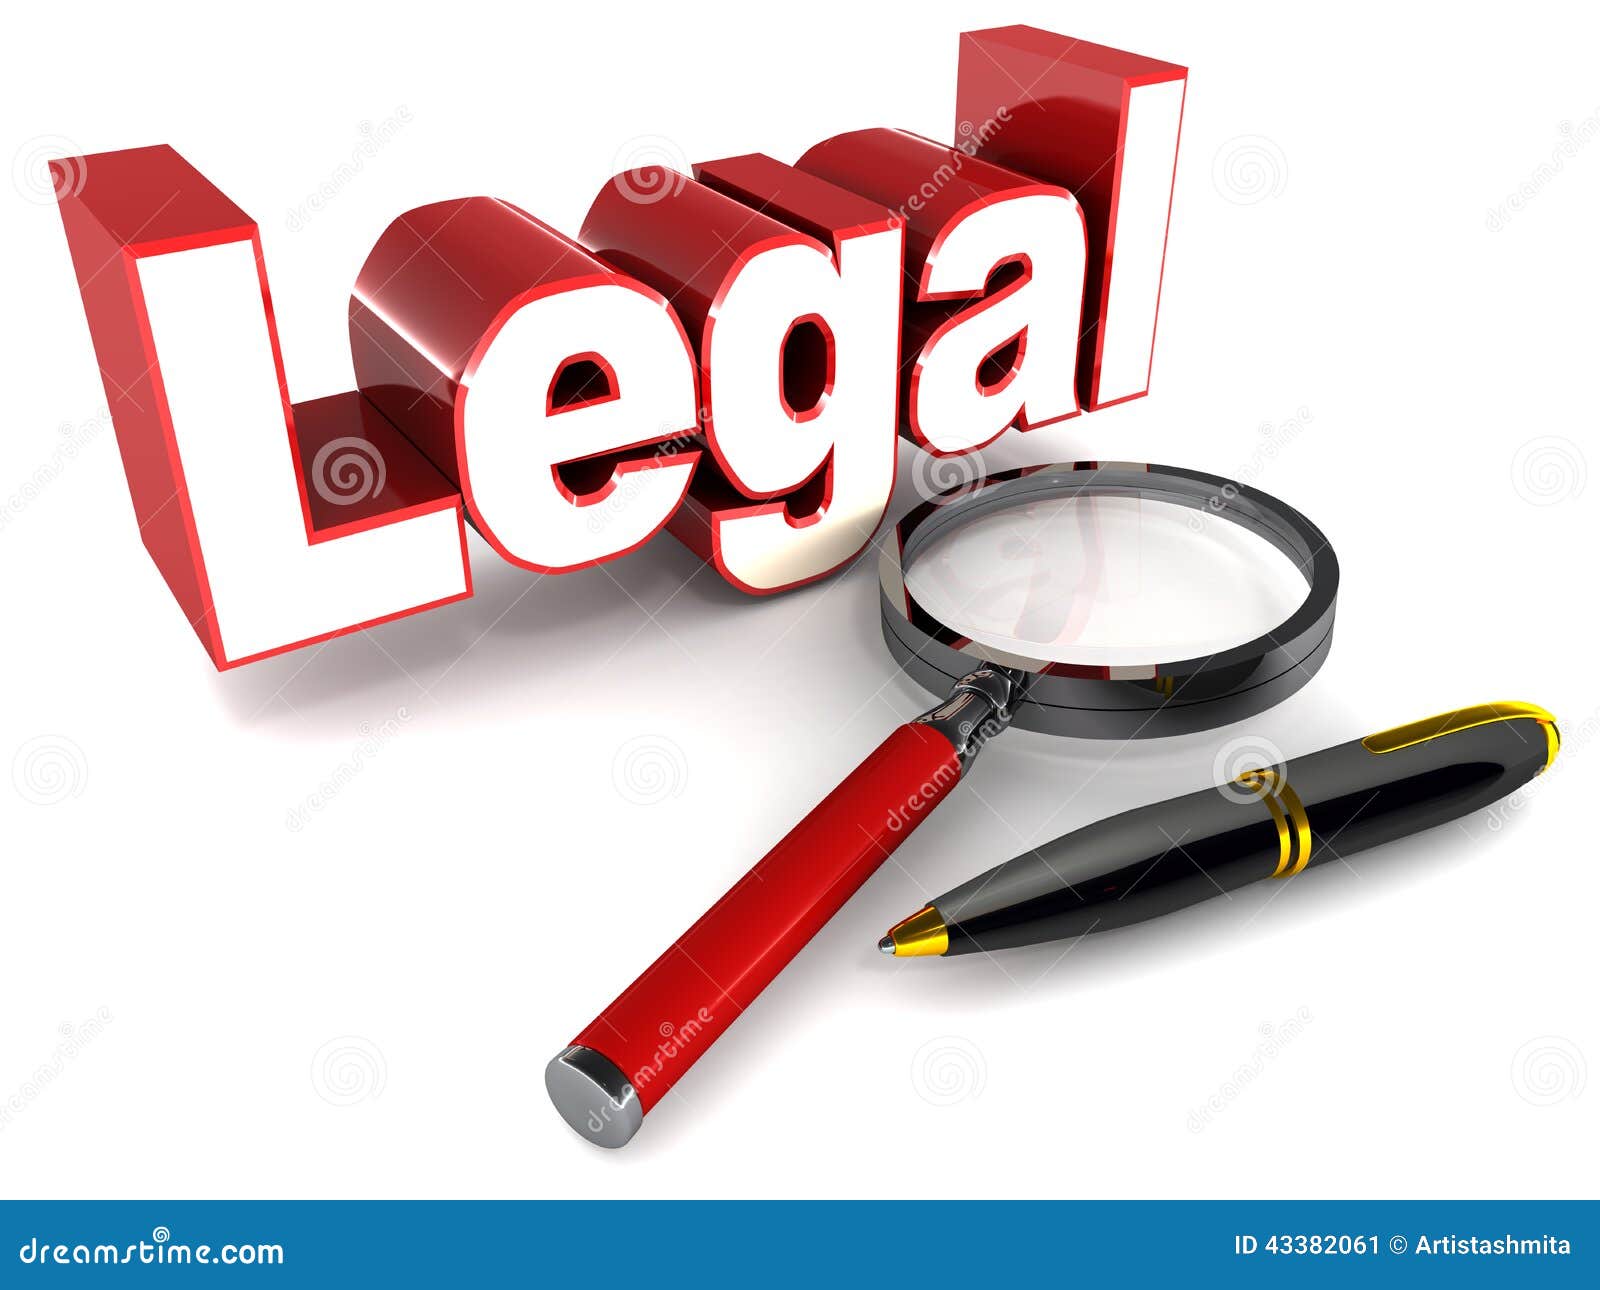 clipart legal document - photo #14